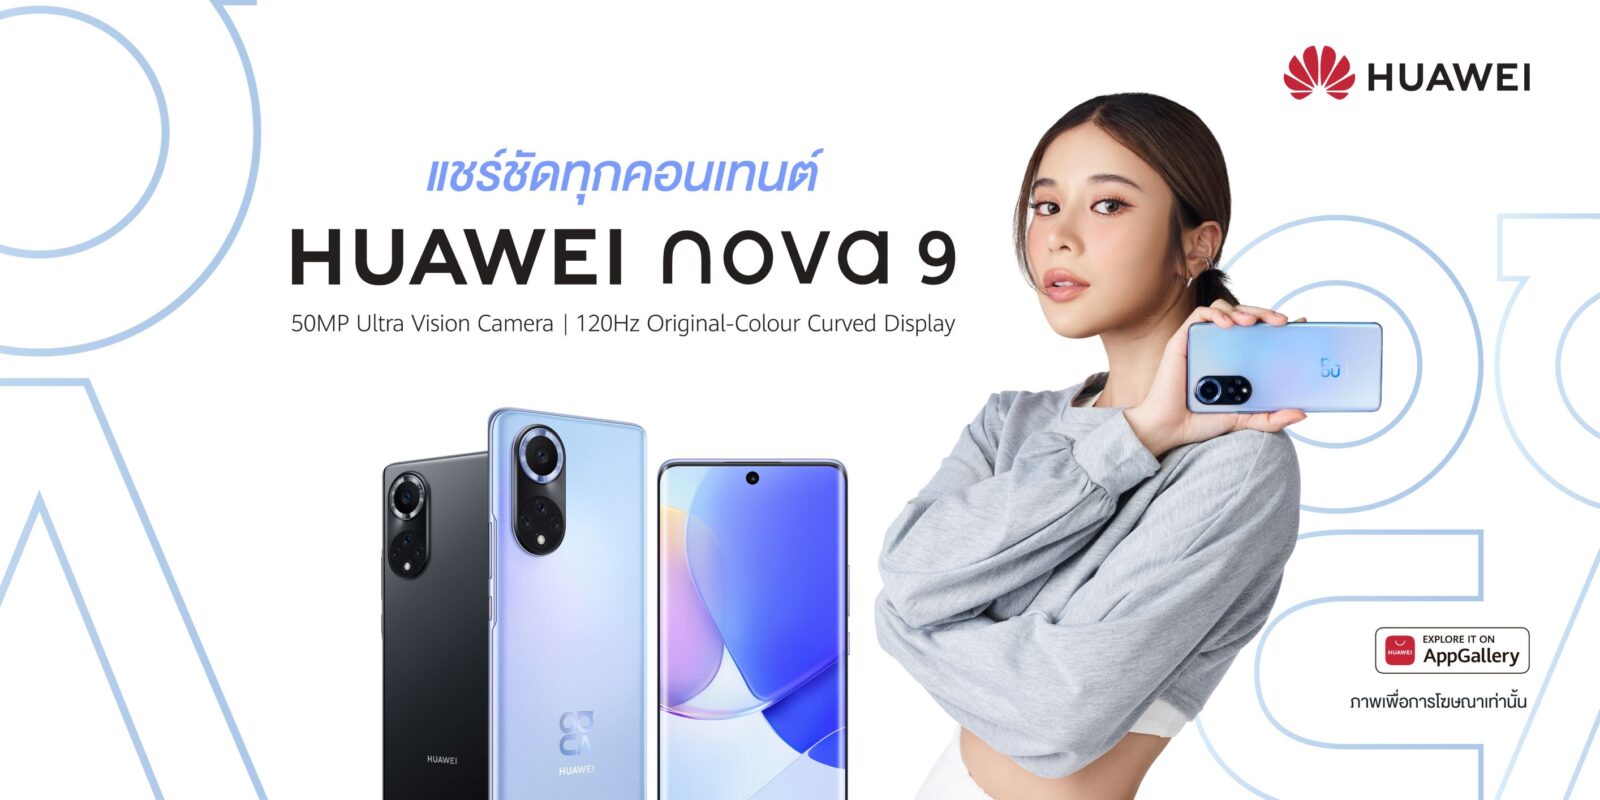 HUAWEI nova 9 PR Launch 1 1 | Huawei nova 9 | เปิดตัว HUAWEI nova 9 พร้อมนวัตกรรมกล้องทรงพลัง แชร์ชัดทุกคอนเทนต์